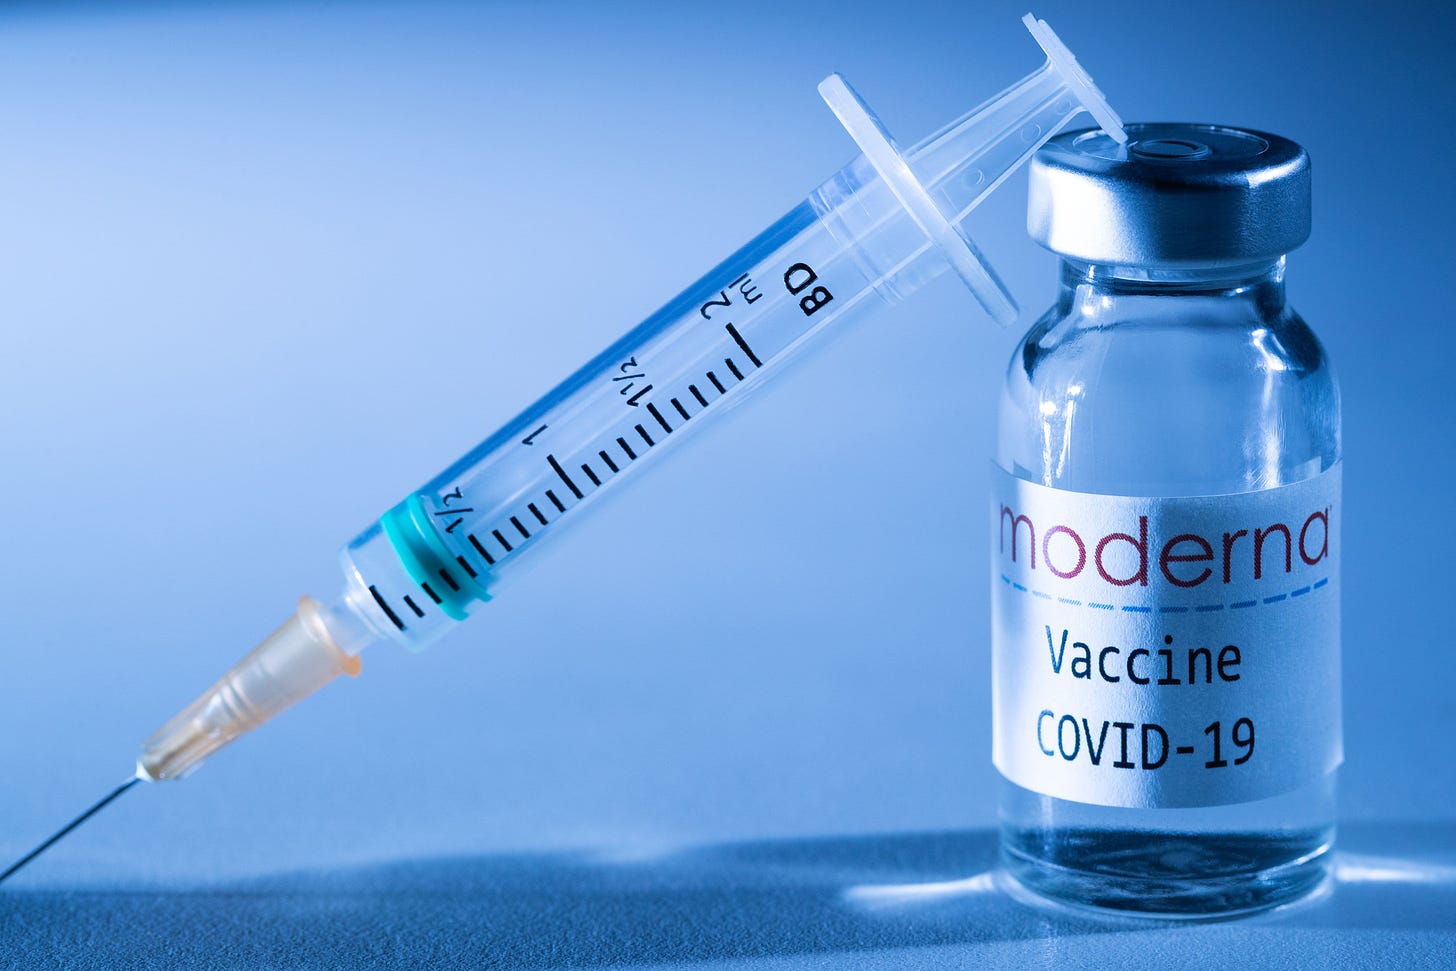 Covid vaccine: U.S. plans to ship 6 million Moderna doses once FDA gives OK